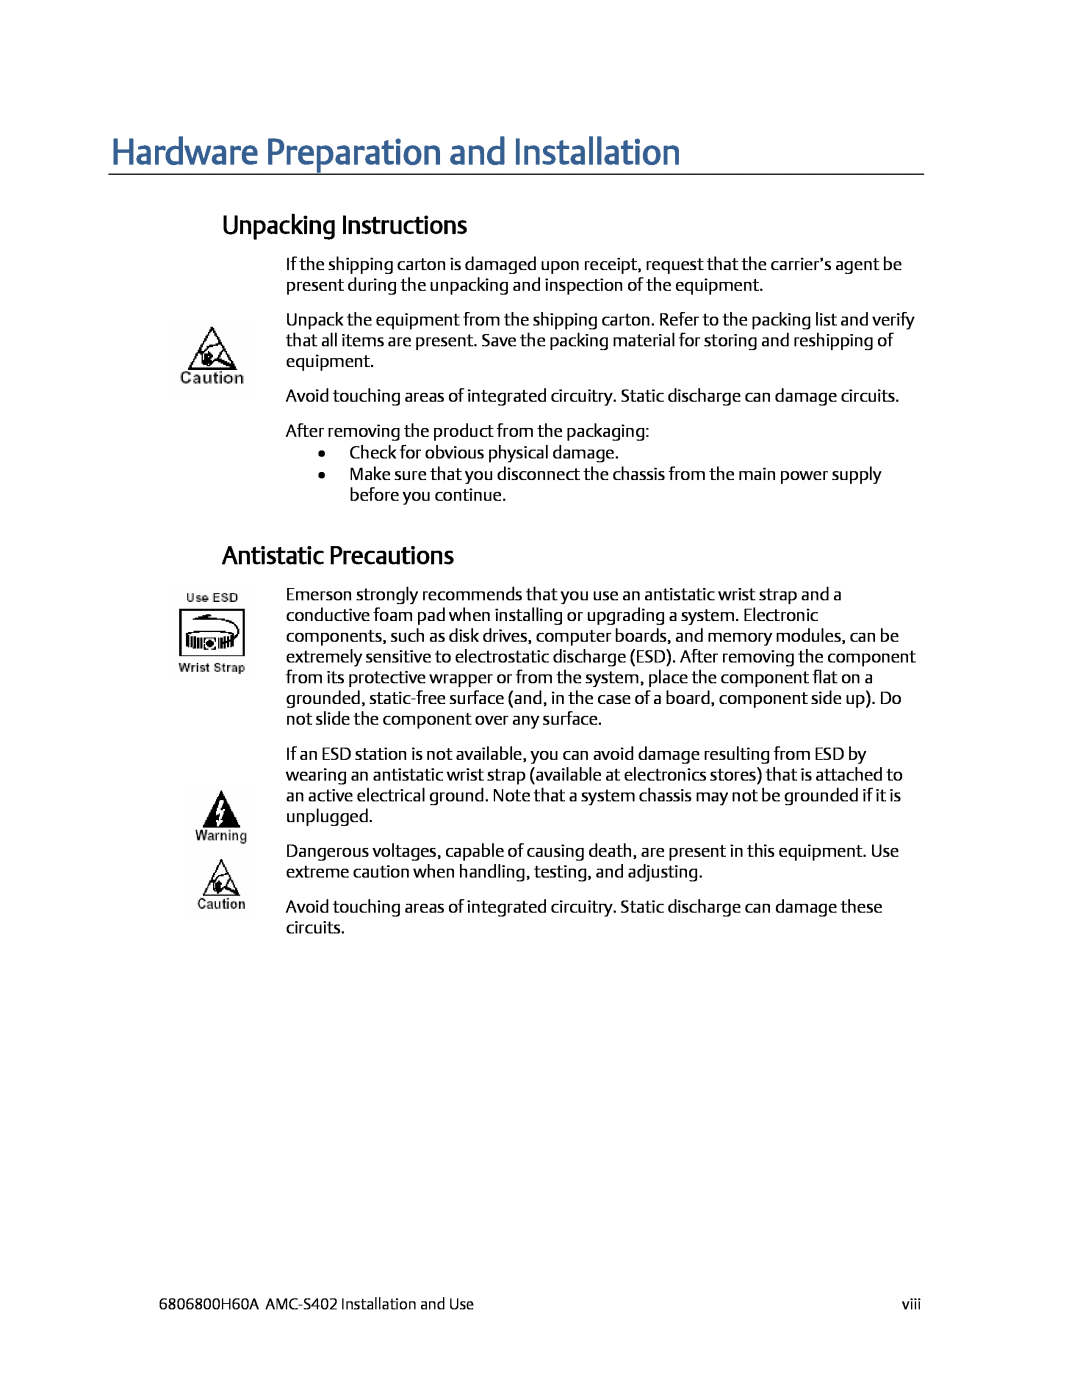 Emerson AMC-S402 manual Hardware Preparation and Installation, Unpacking Instructions, Antistatic Precautions 